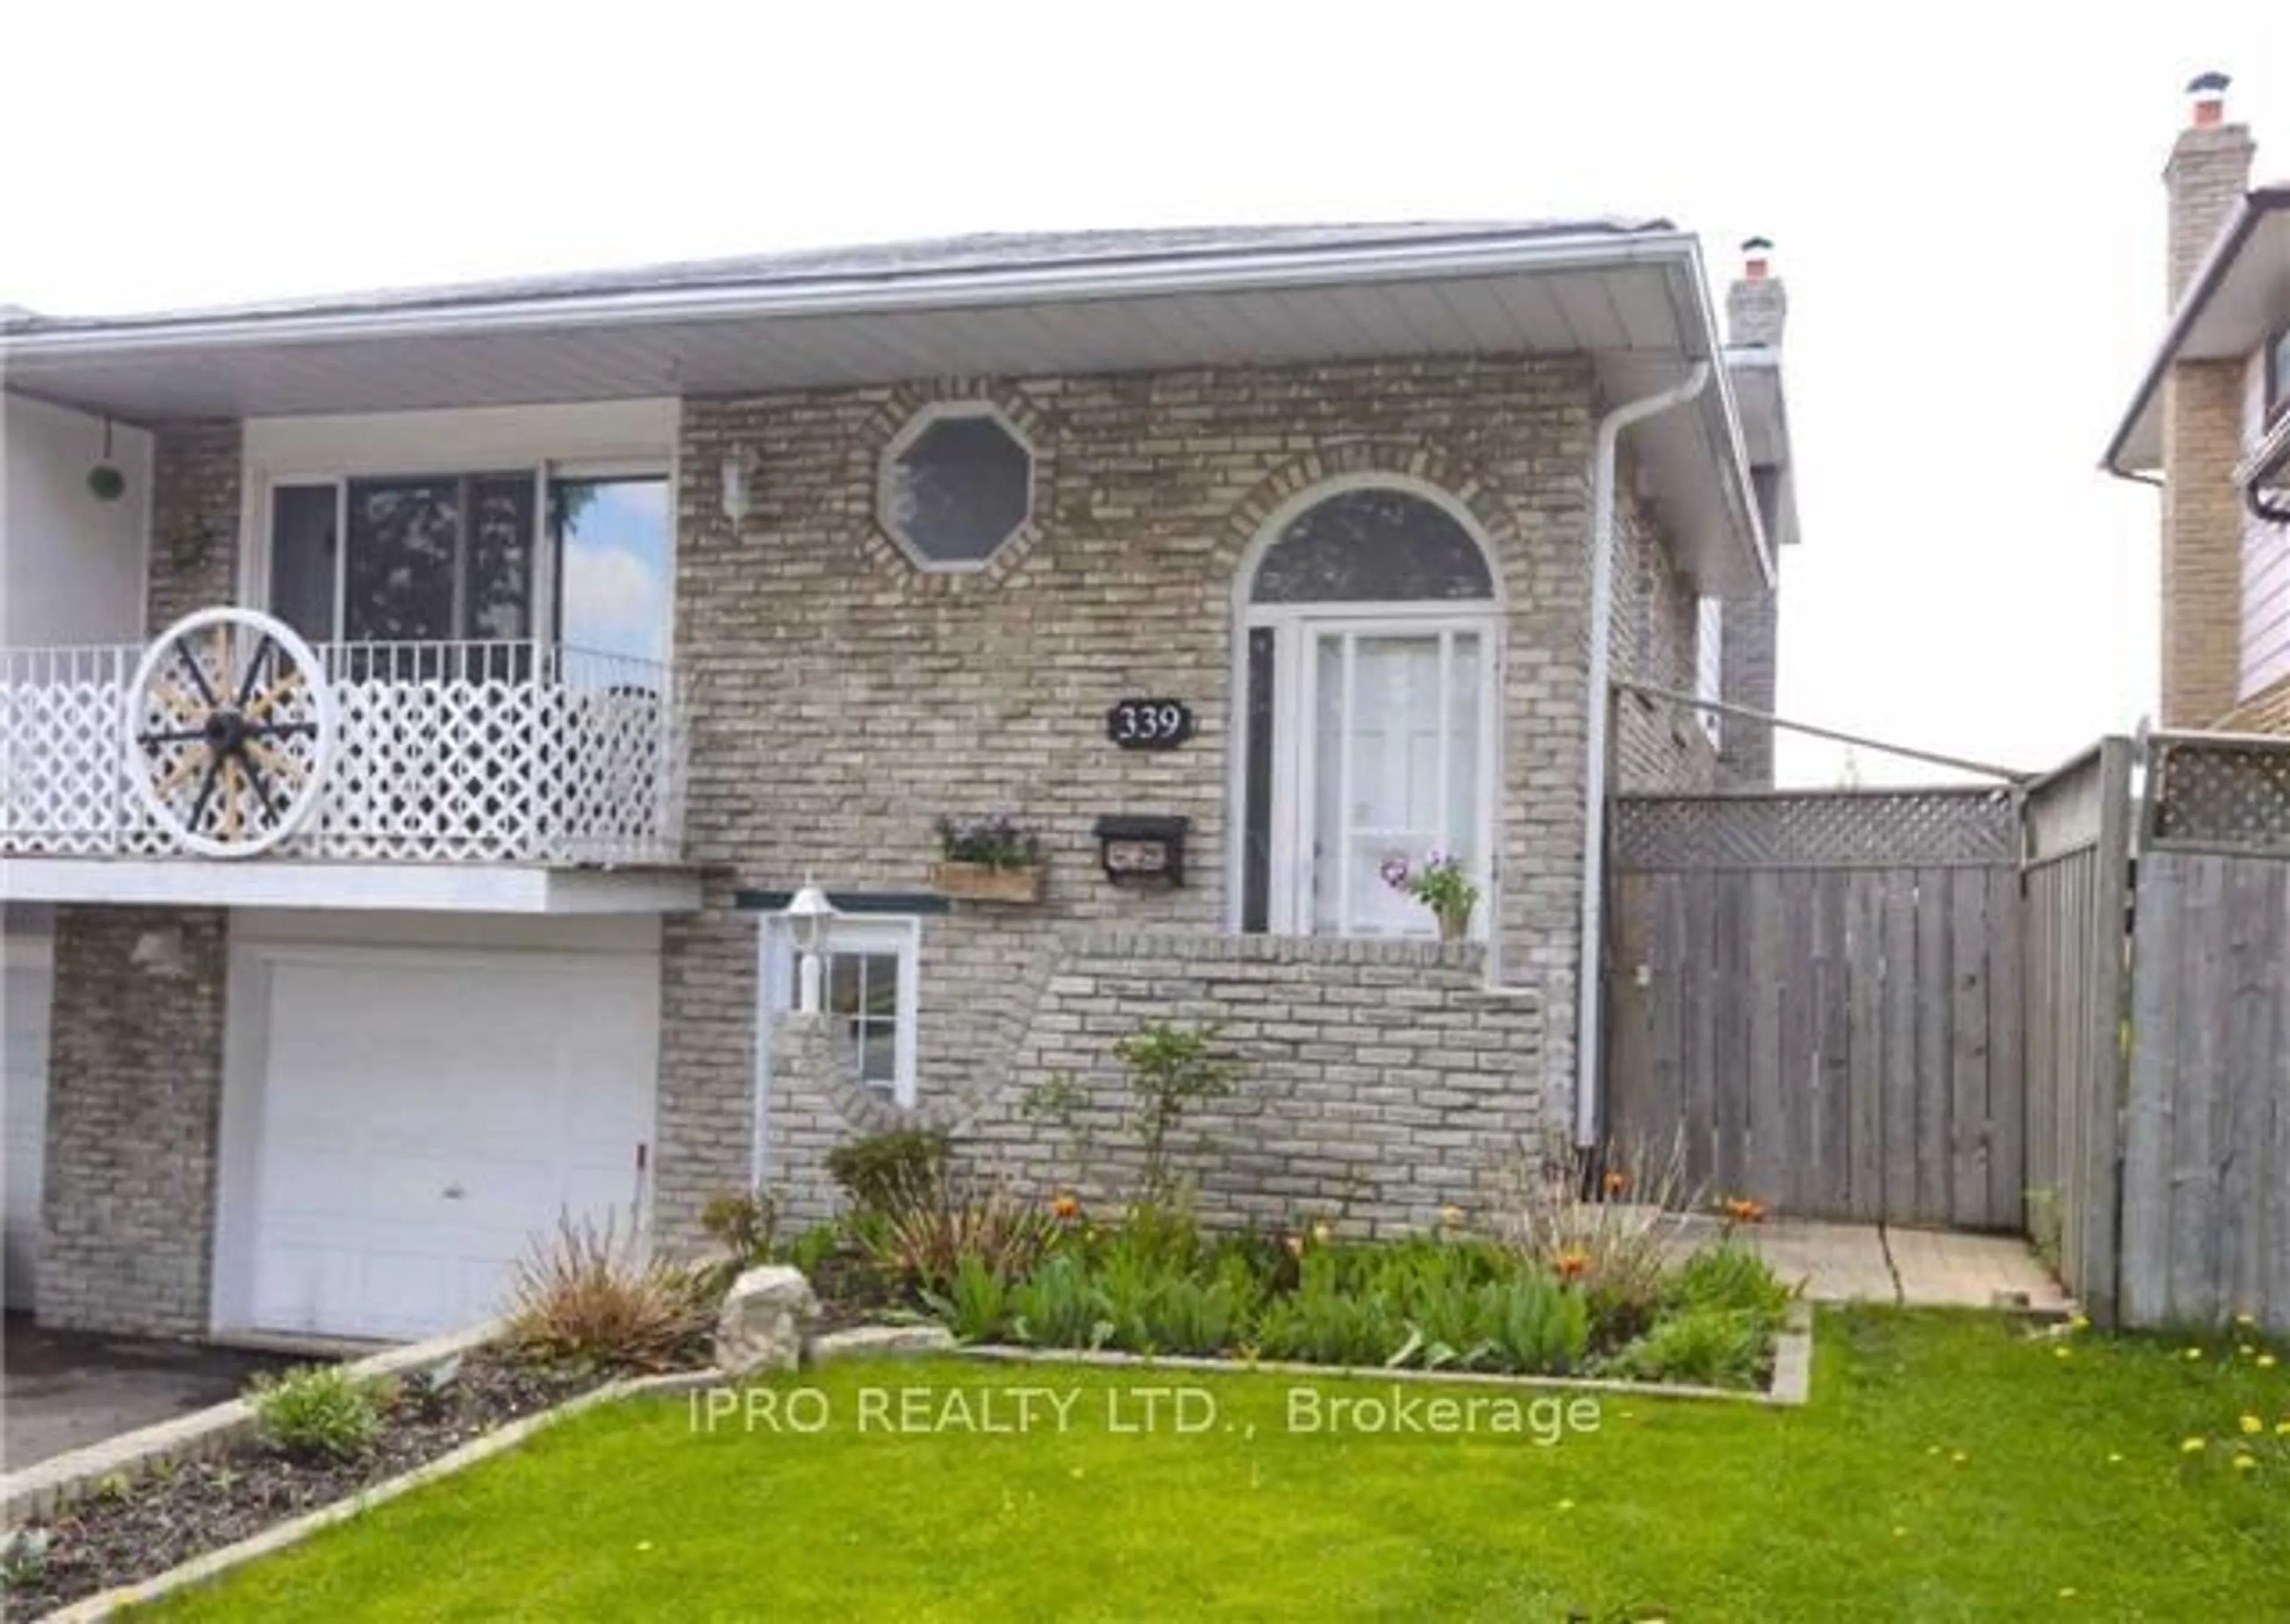 Frontside or backside of a home for 339 Hansen Rd, Brampton Ontario L6V 2Y2